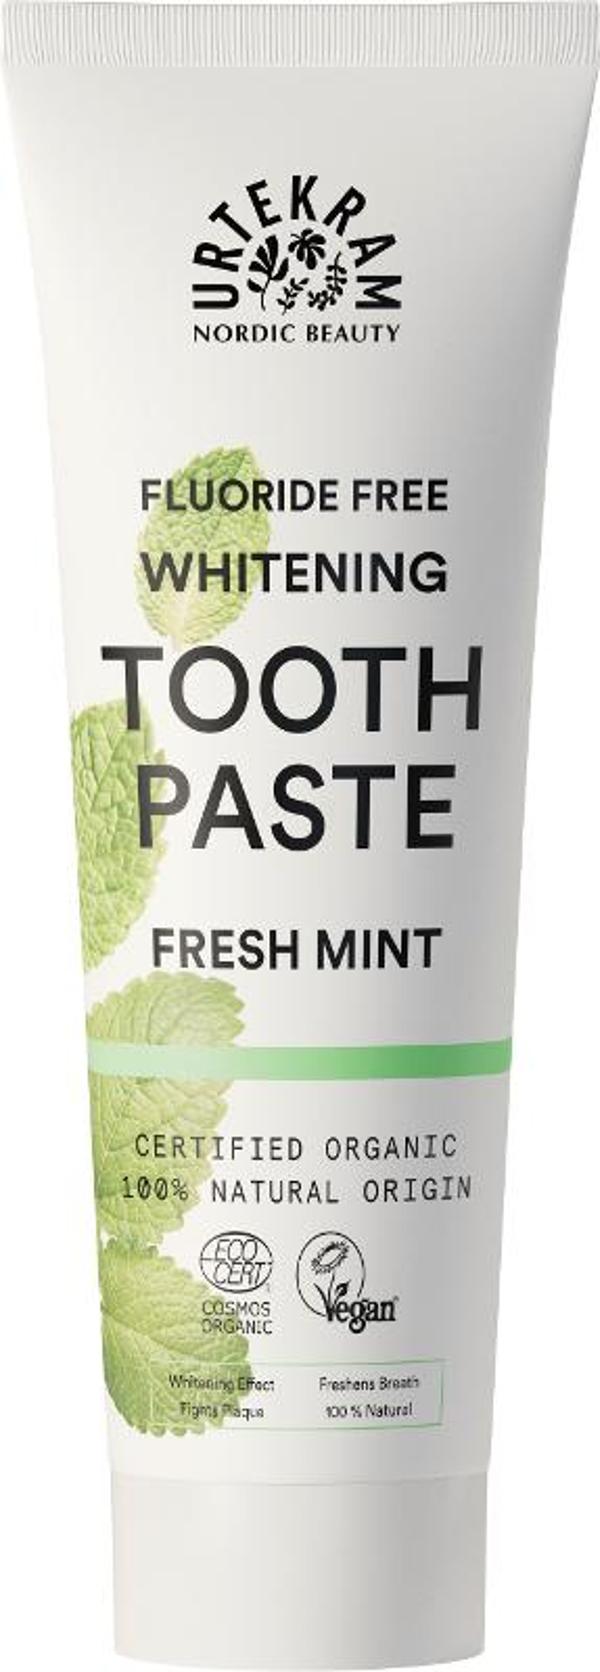 Produktfoto zu Fresh Mint Zahnpasta Whitening - 75ml